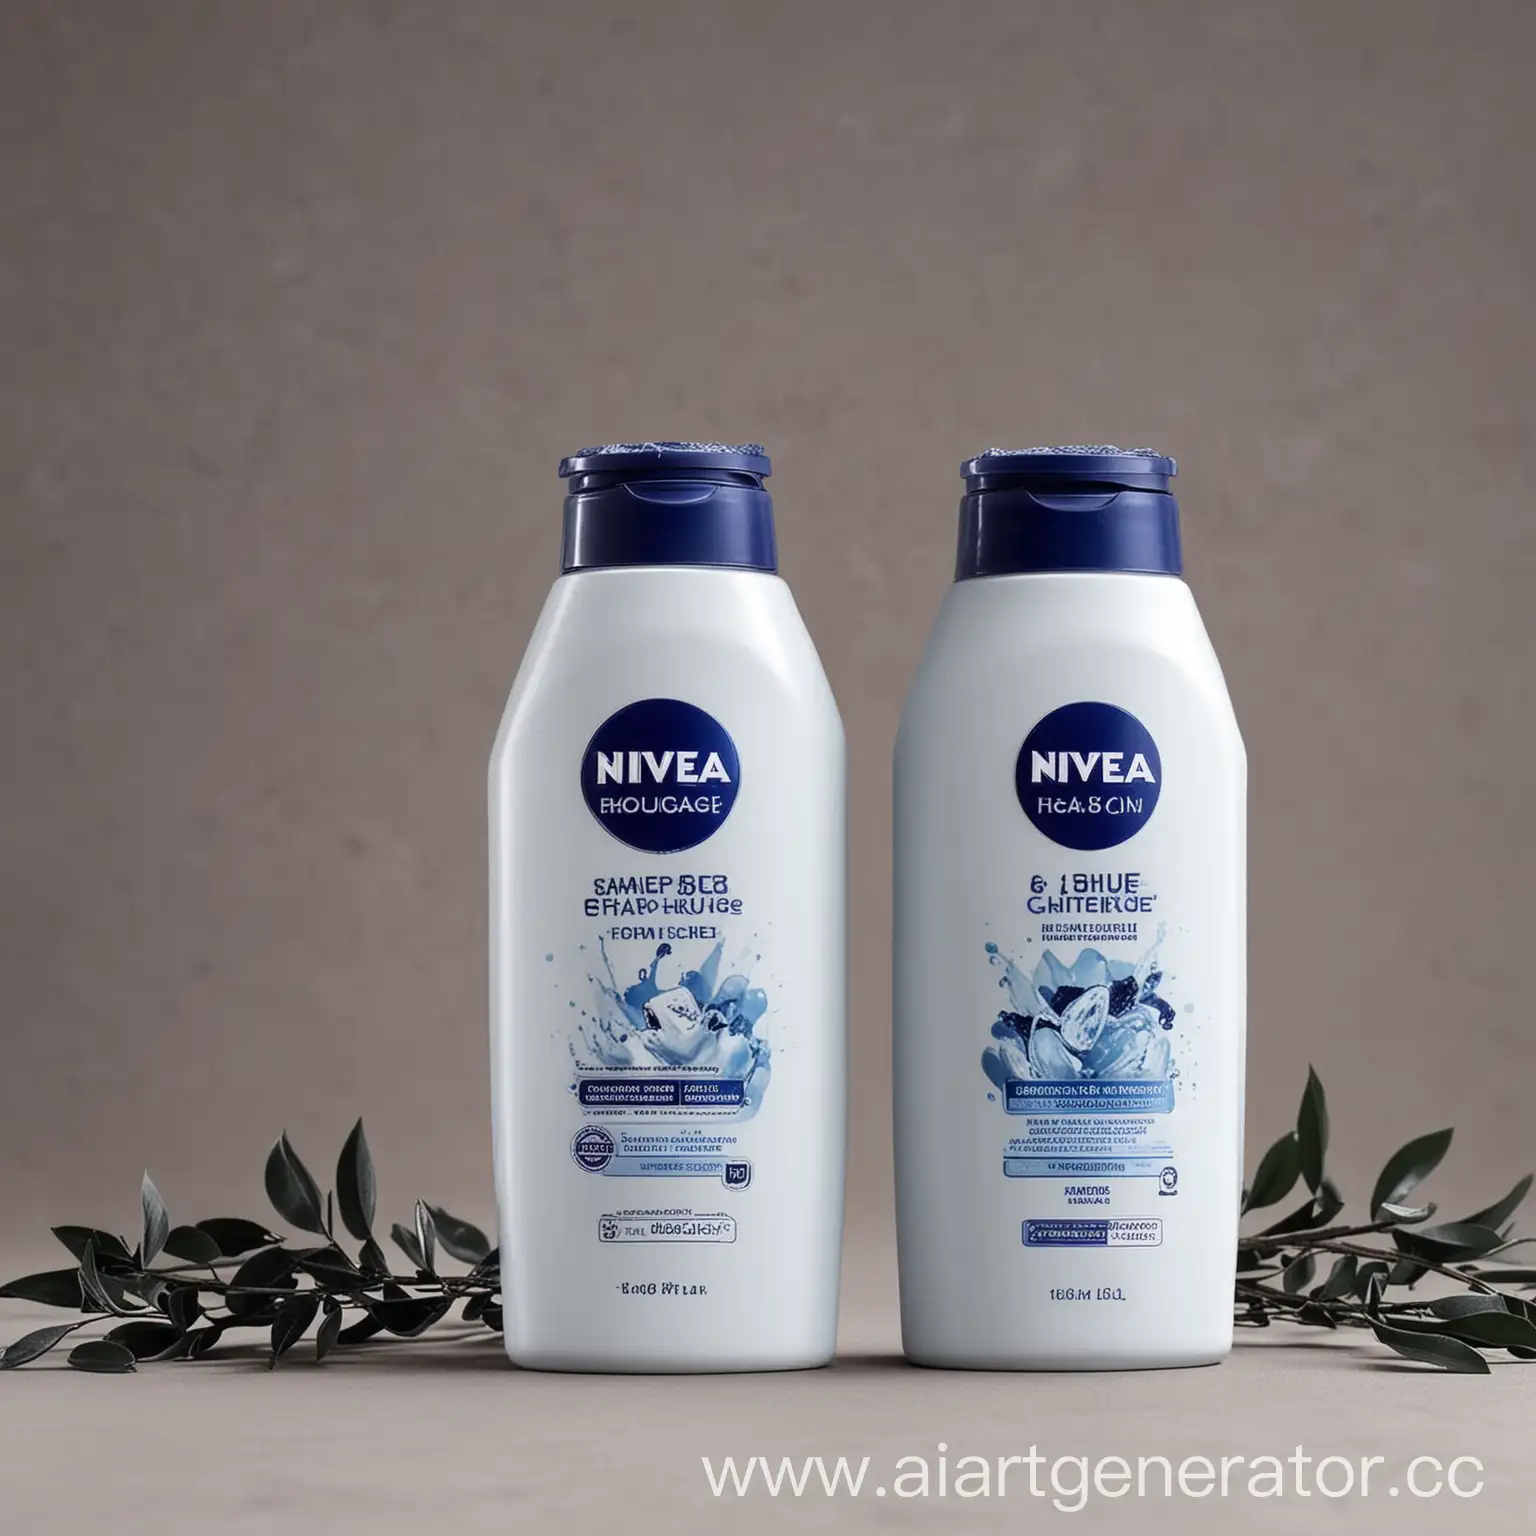 NIVEA-400ml-and-NIVEA-MEN-ULTRA-400ml-Shampoo-Set-for-the-Whole-Family-with-Water-Splashes-2-x-400-800-ml